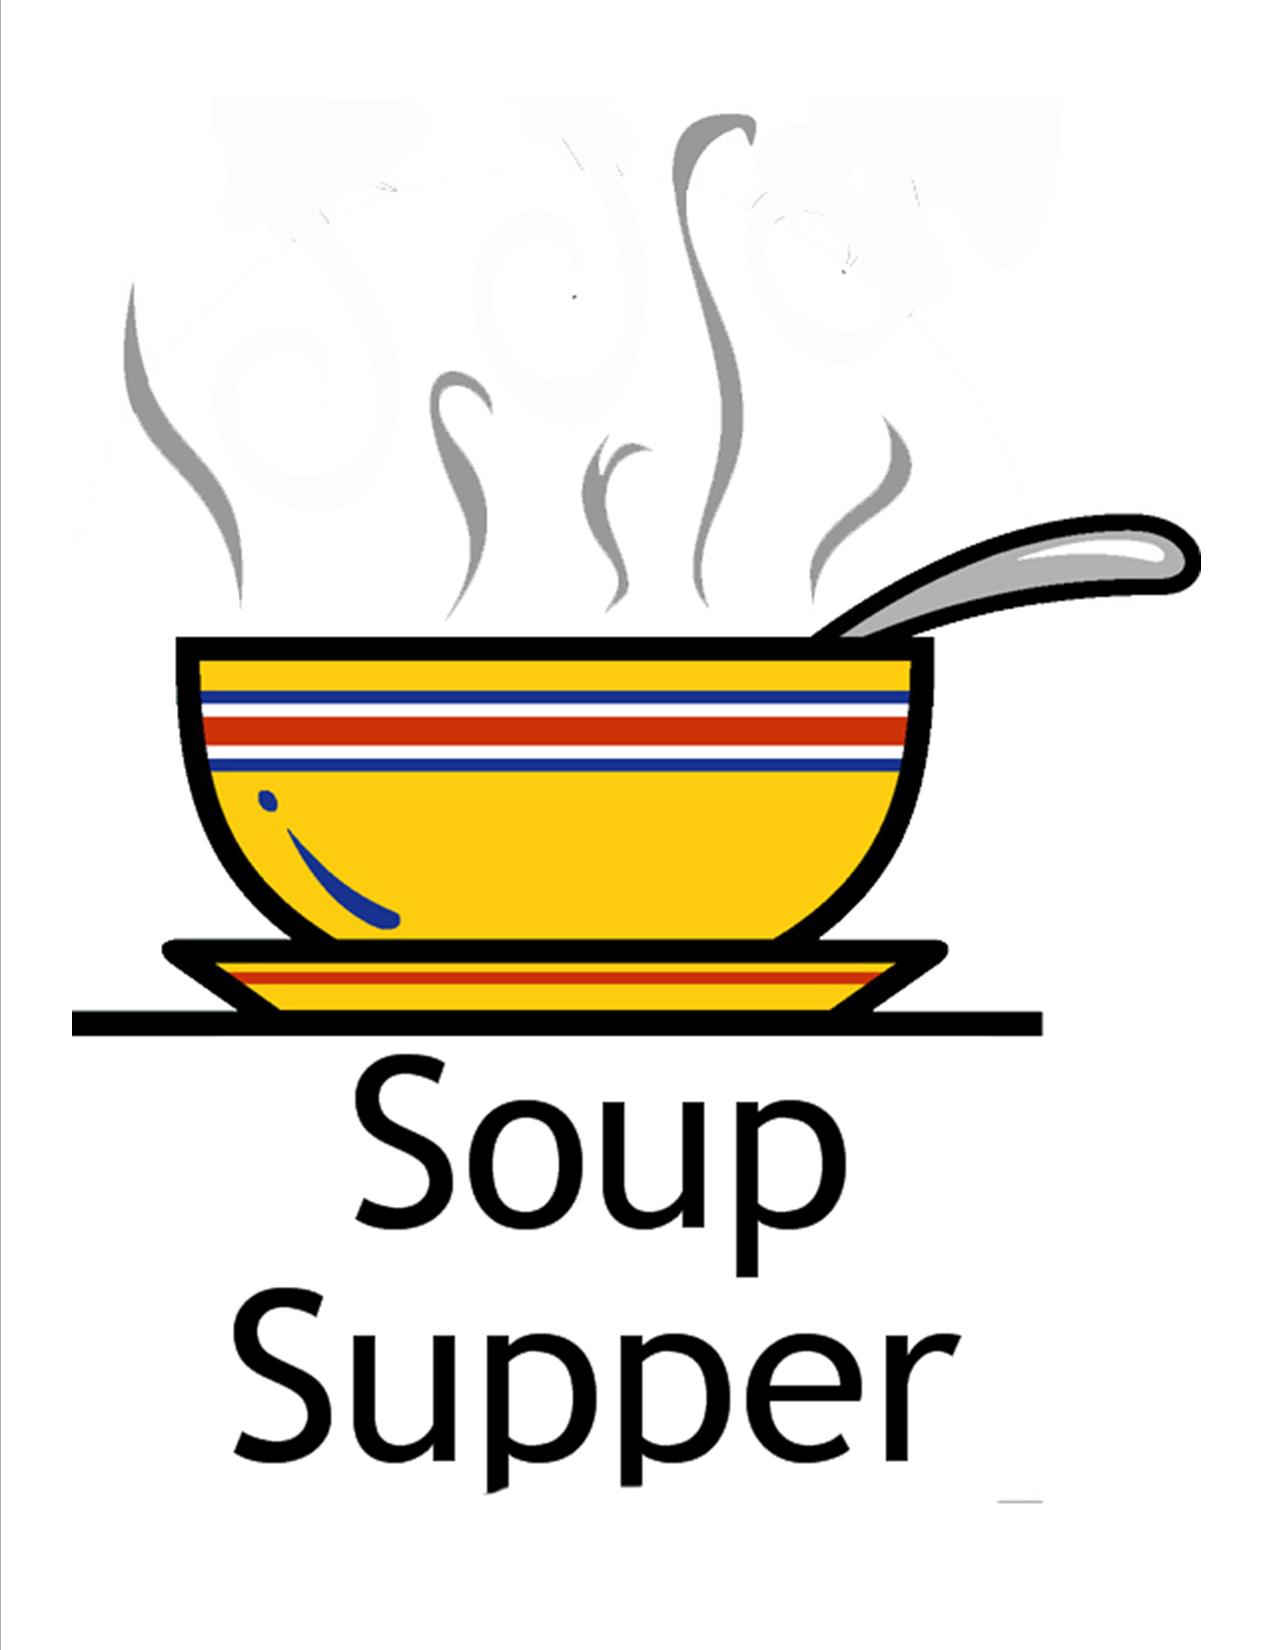 soup-supper-clip-art